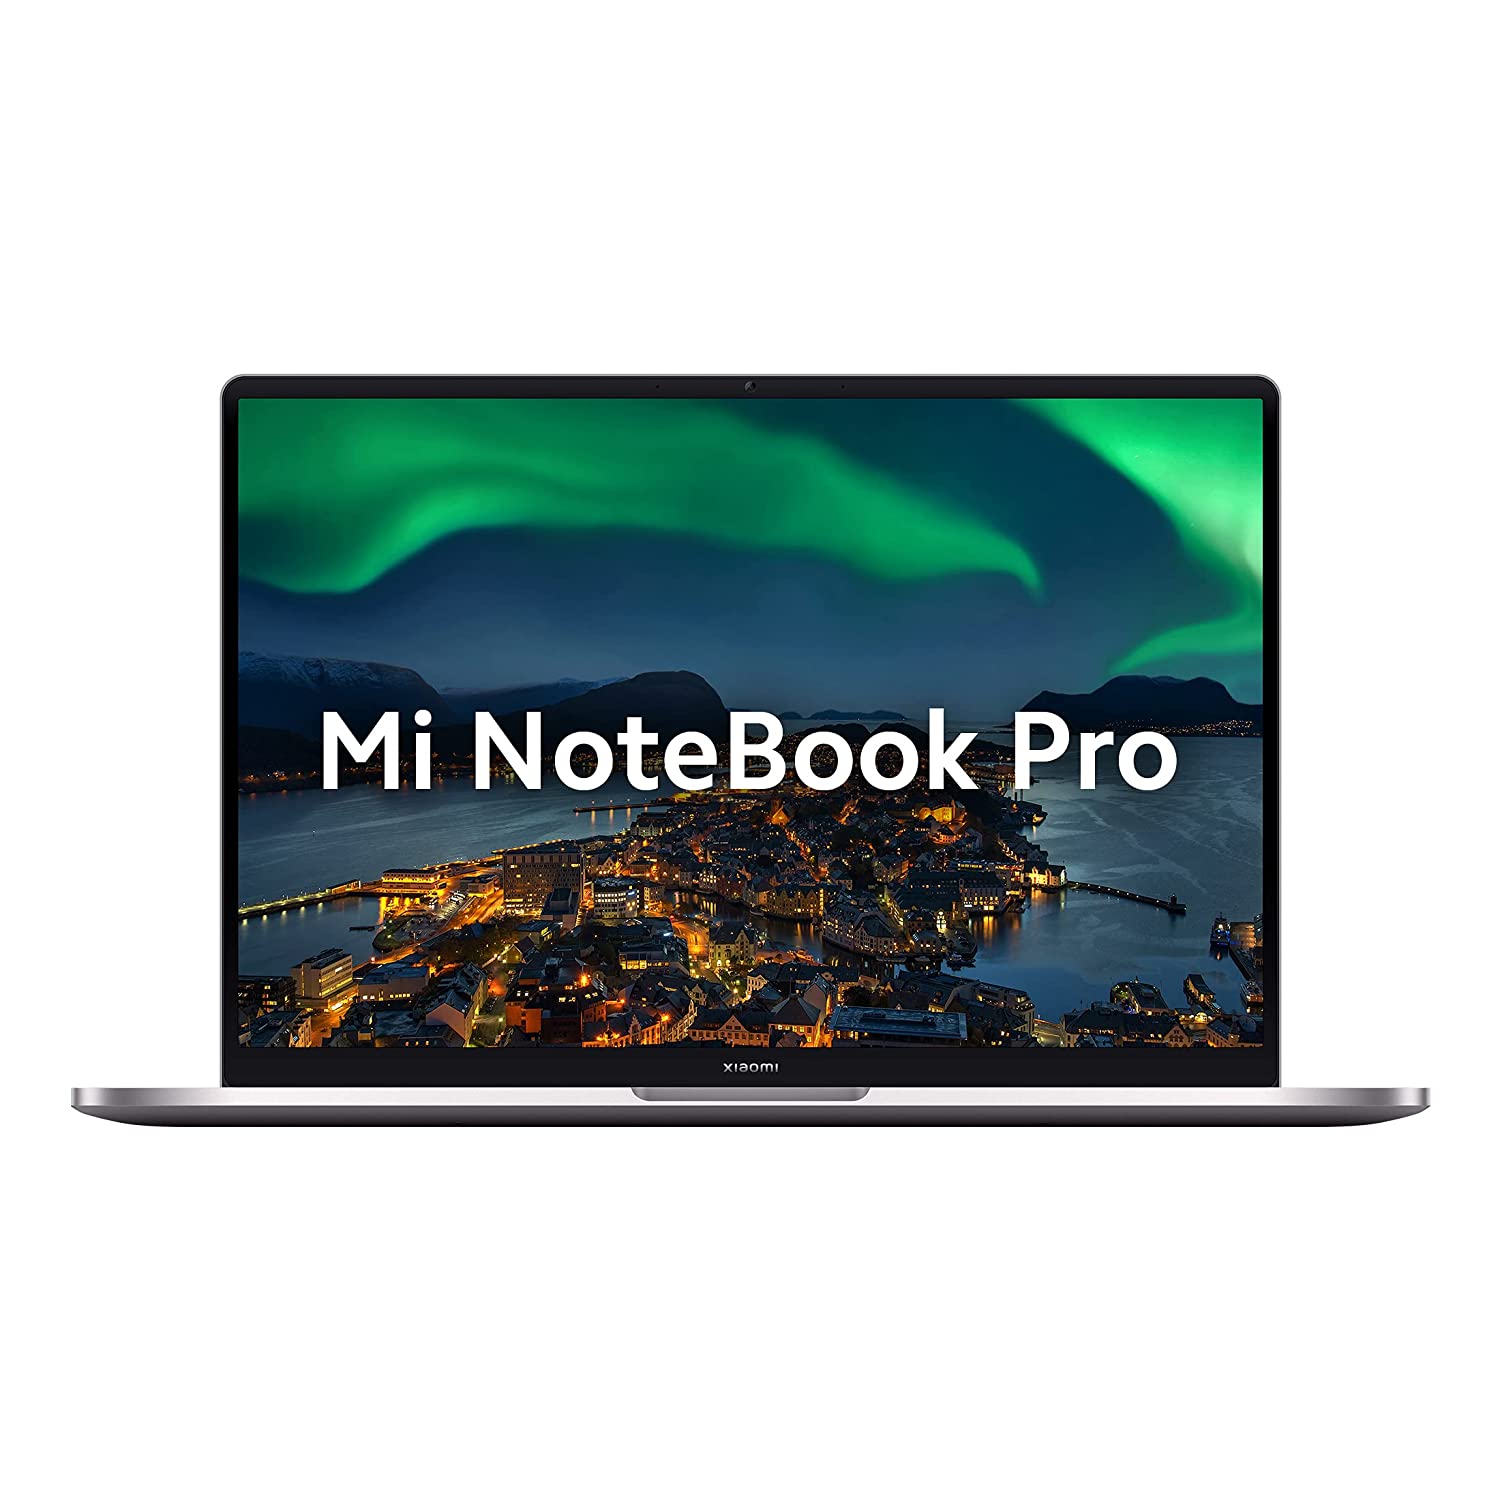 Mi Notebook Pro Offers